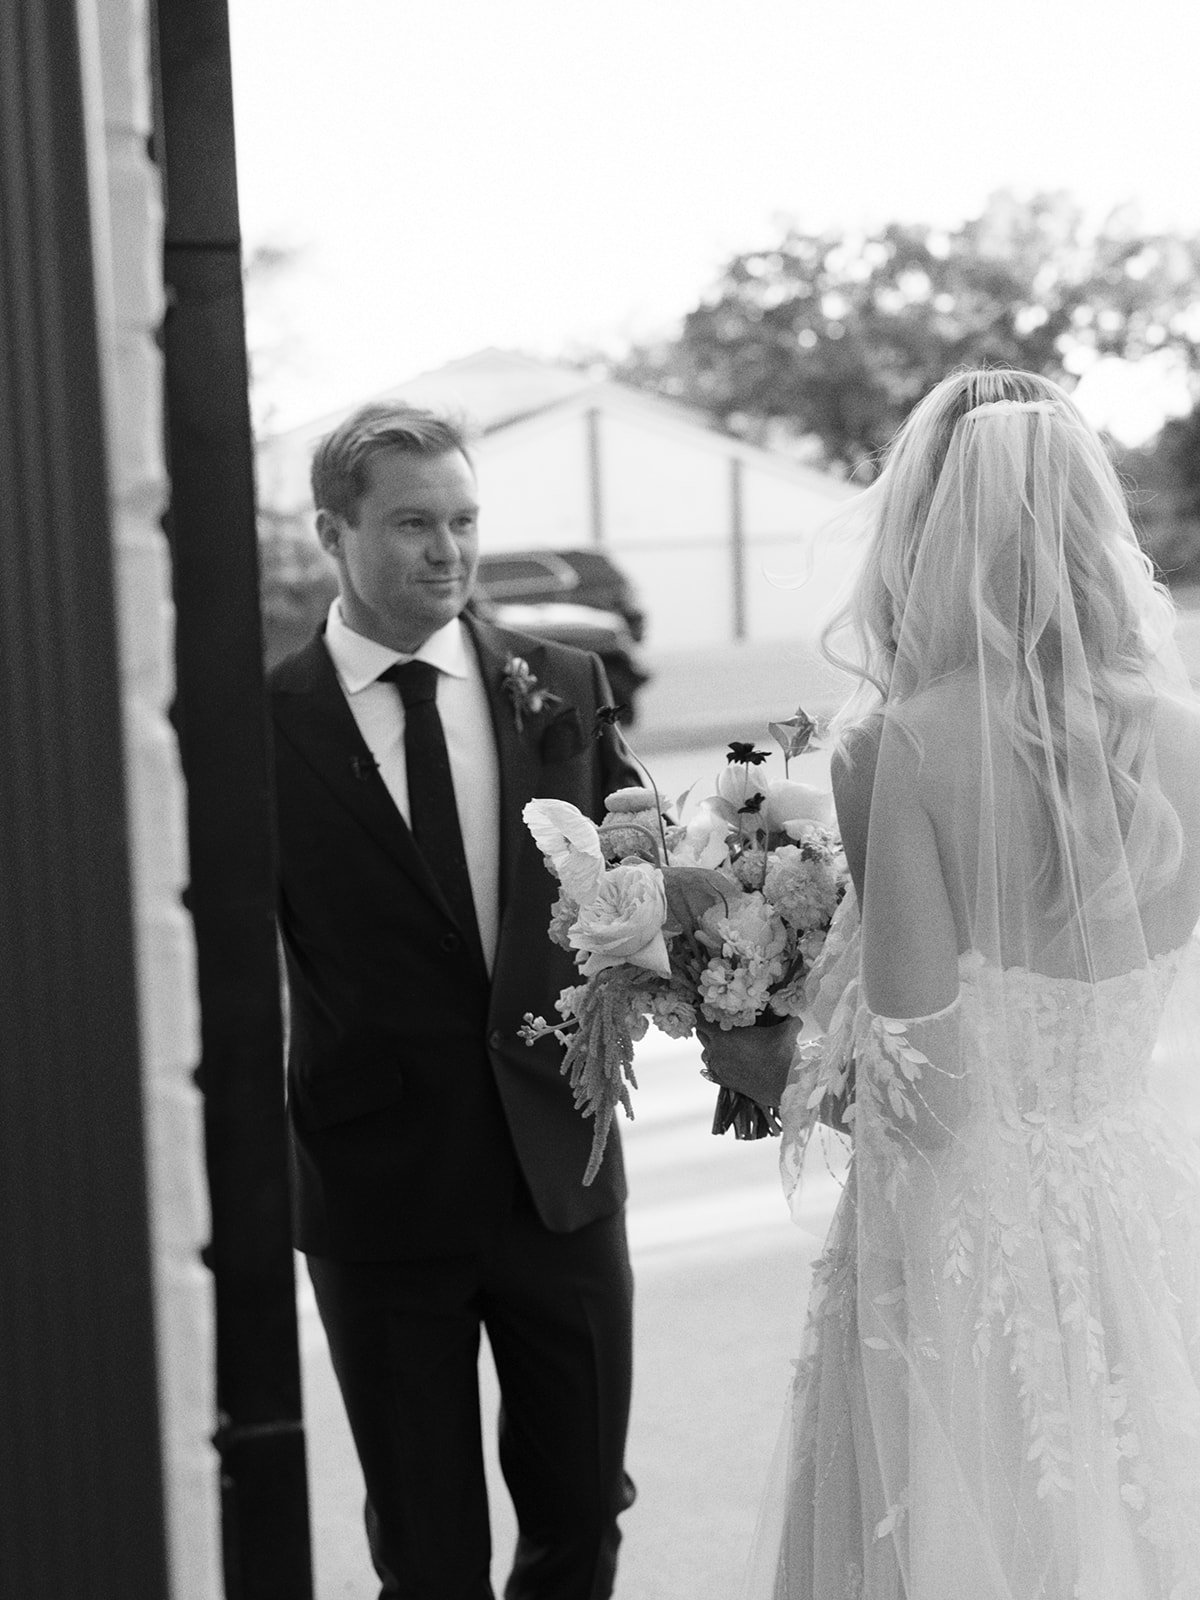 Best-Austin-Wedding-Photographers-Elopement-Film-35mm-Asheville-Santa-Barbara-Backyard-53.jpg